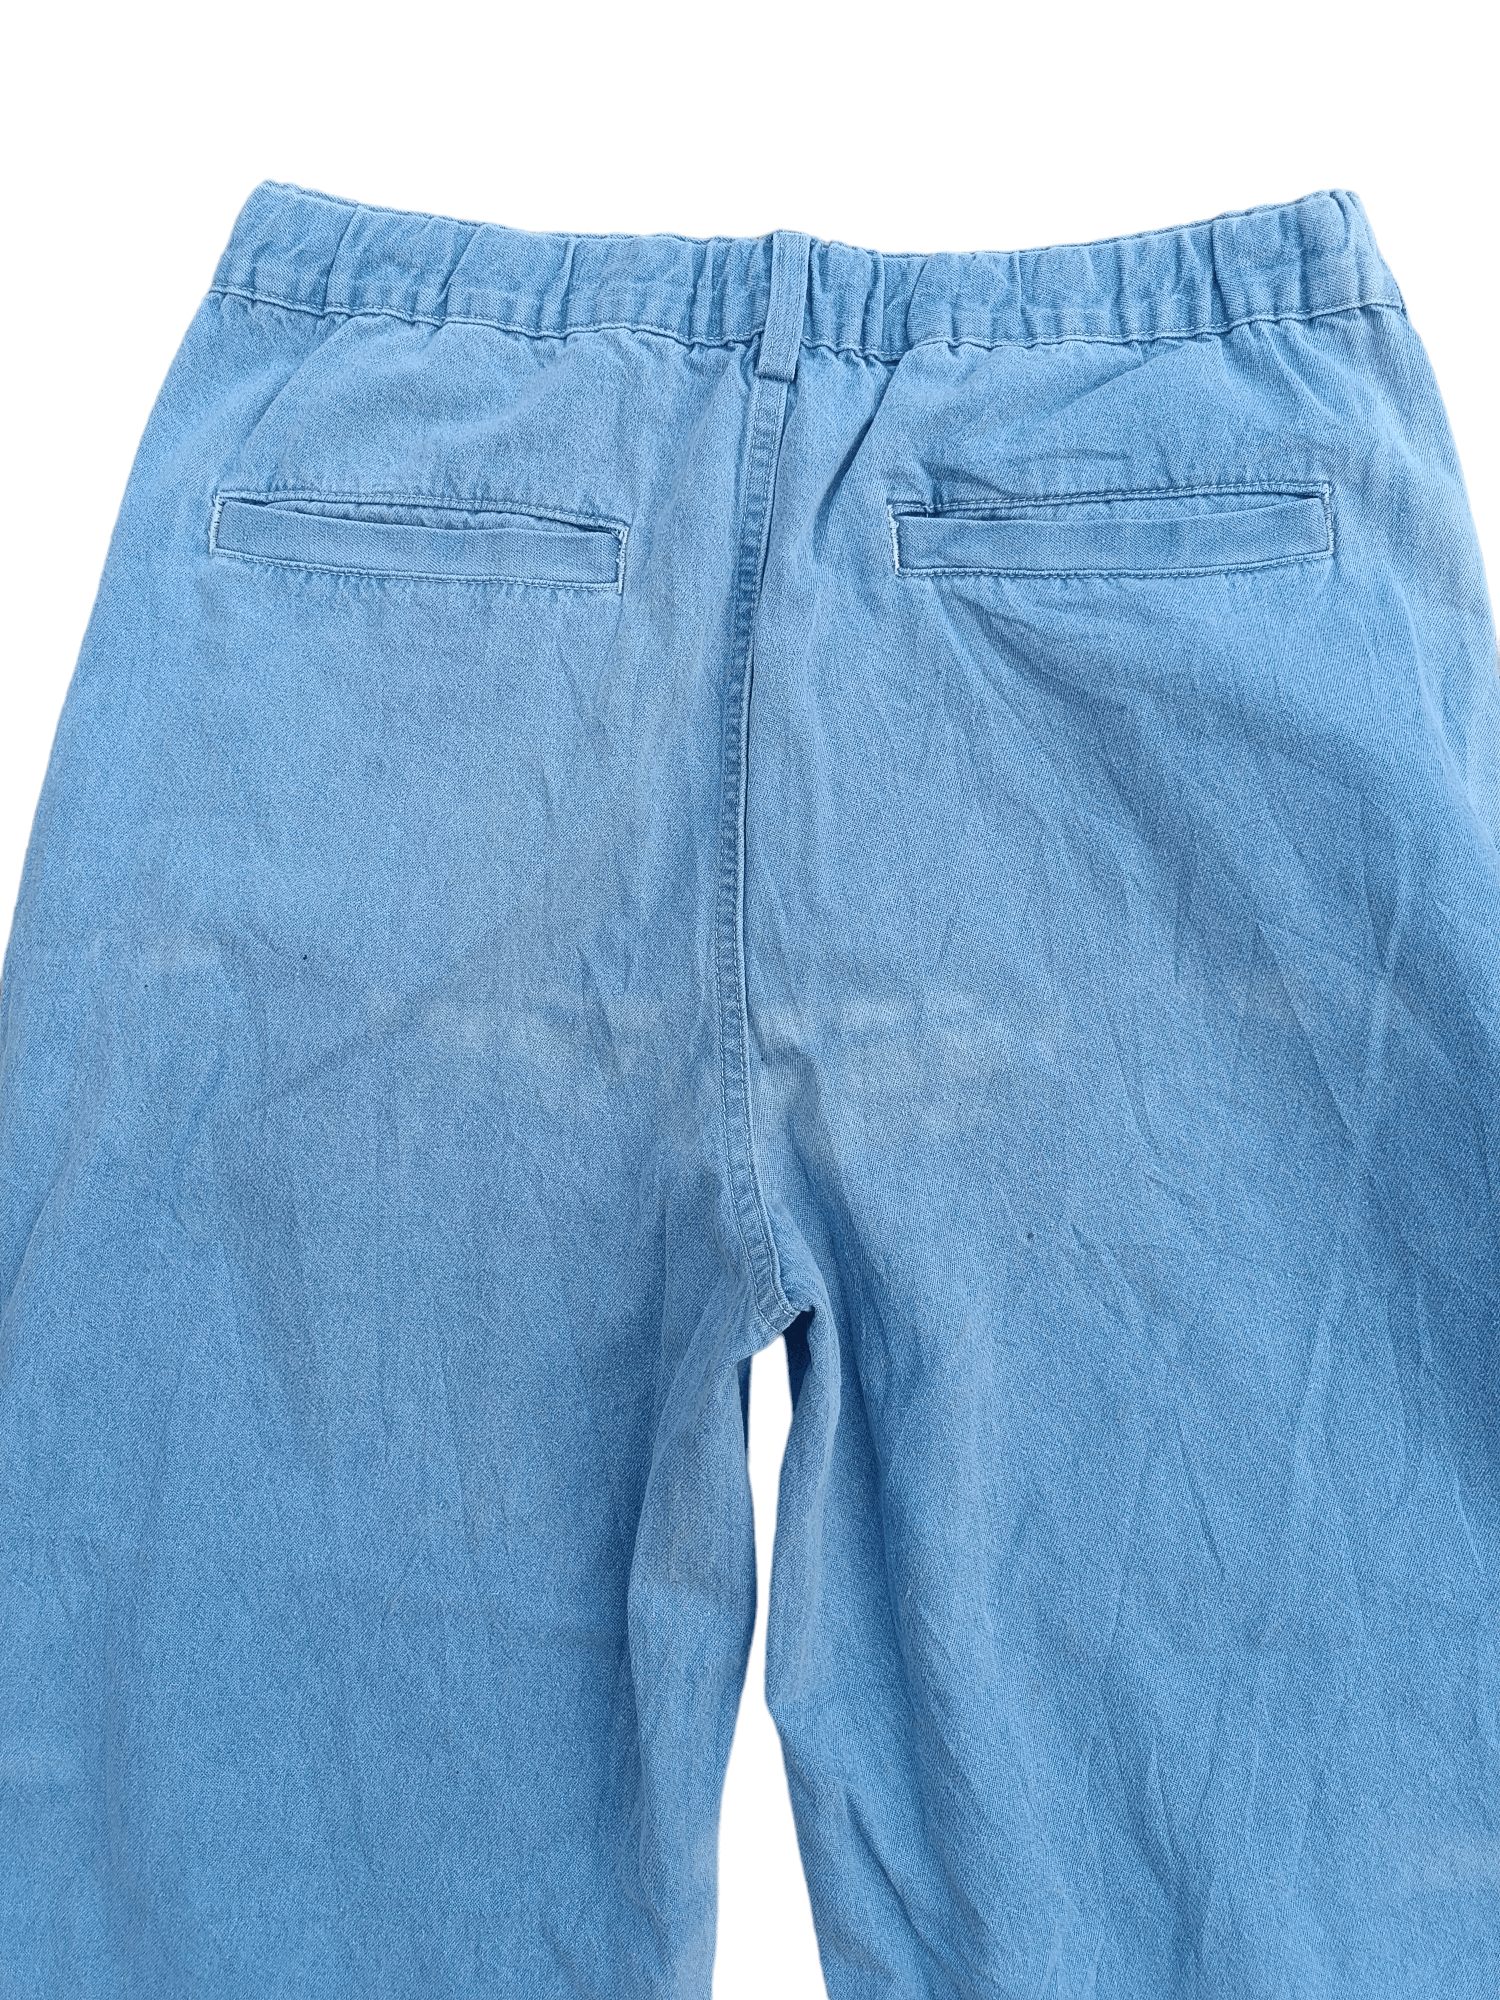 Japanese Brand Vintage Japanese Gu Baggy Style Flare Jeans 30x30 Size US 32 / EU 48 - 3 Thumbnail